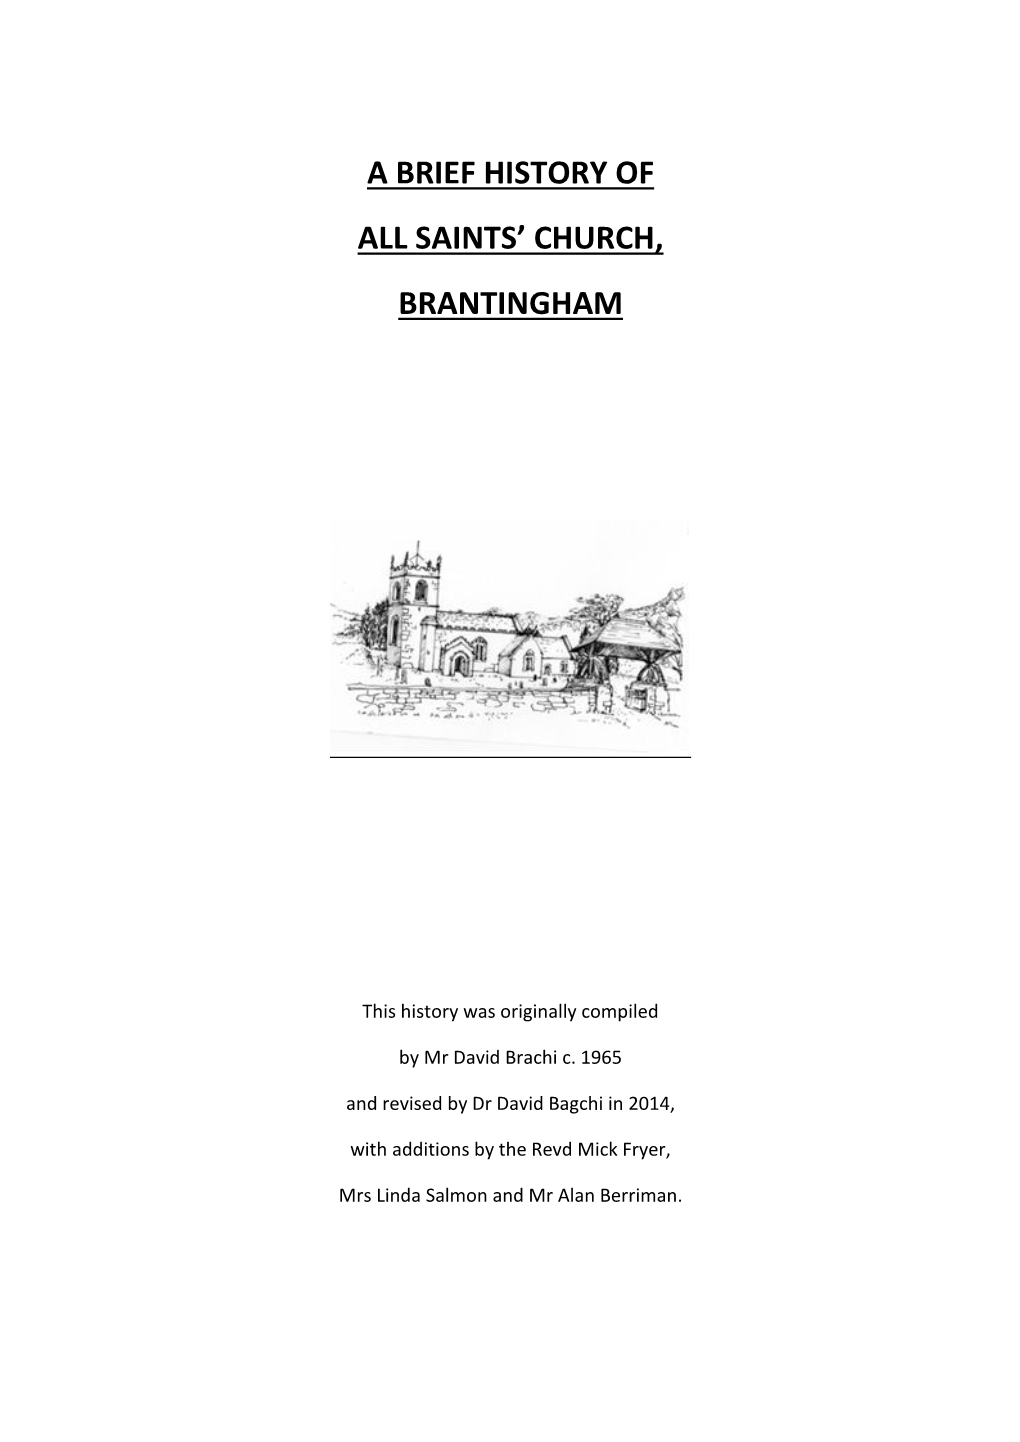 A Brief History of All Saints' Church, Brantingham